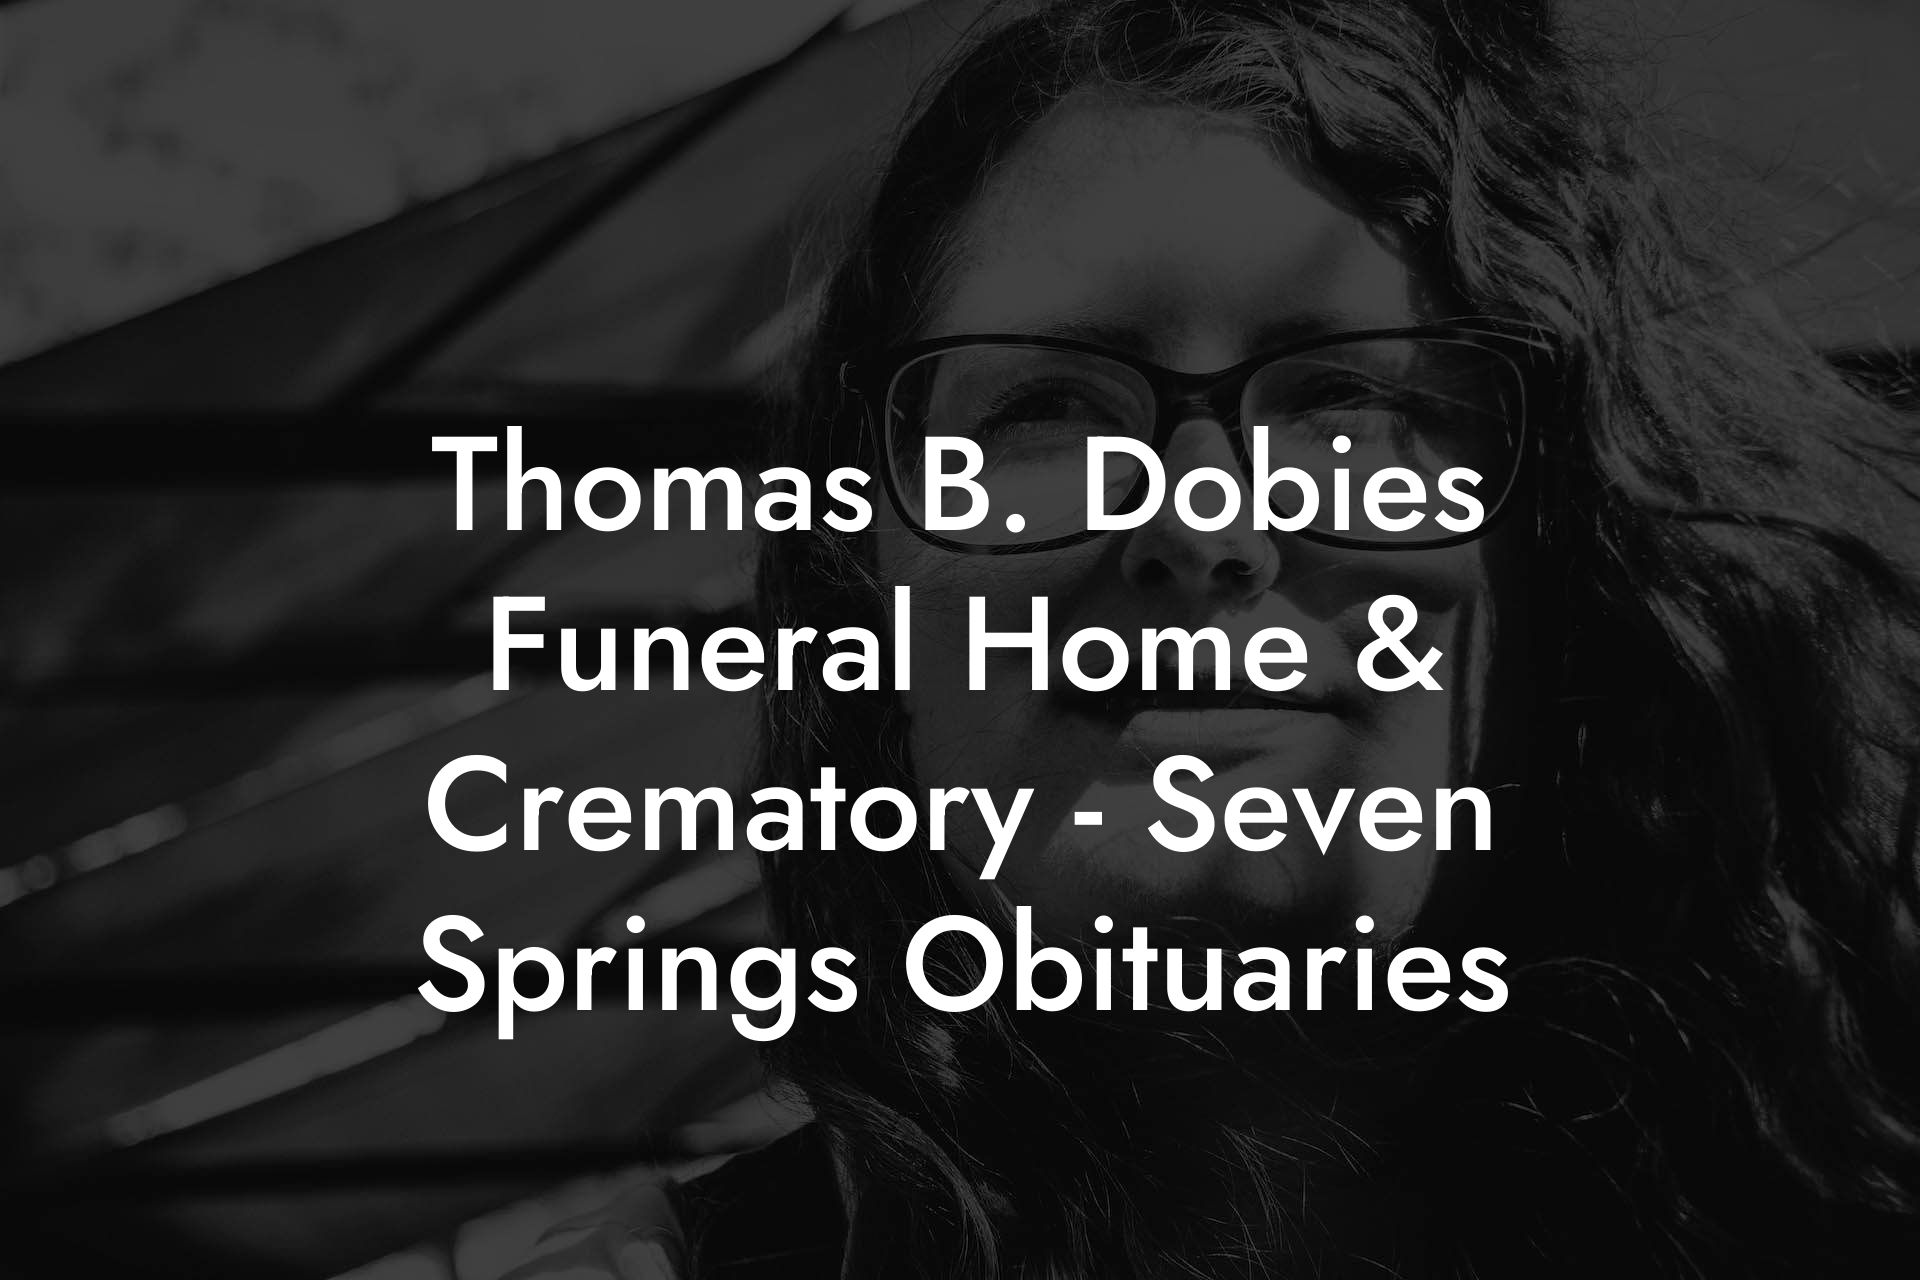 Thomas B. Dobies Funeral Home & Crematory - Seven Springs Obituaries